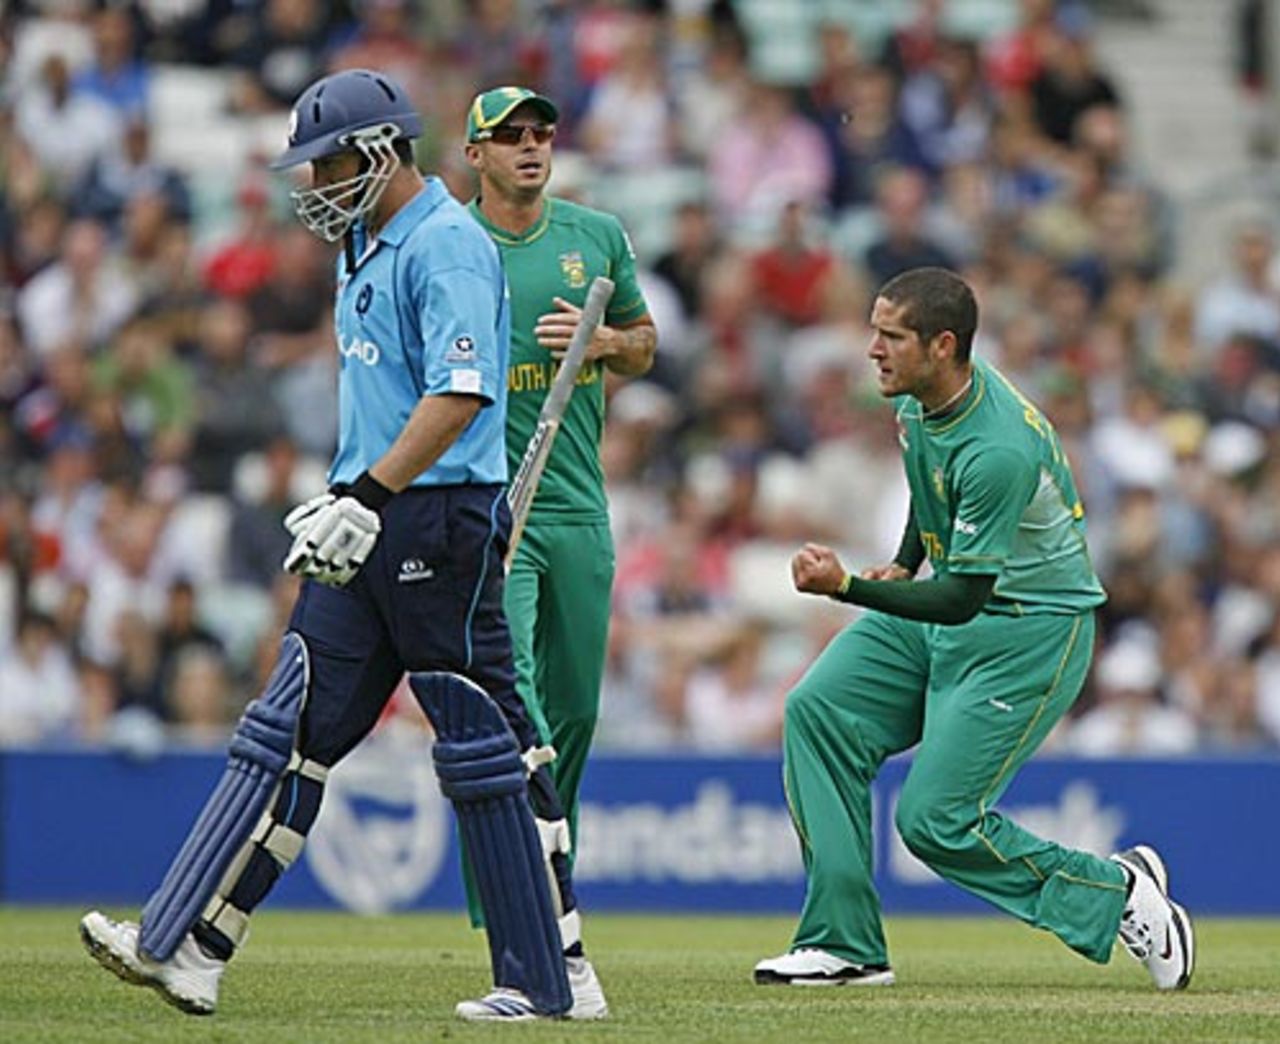 Wayne Parnell gets rid of Gavin Hamilton, Scotland v South Africa, ICC World Twenty20, The Oval, June 7, 2009